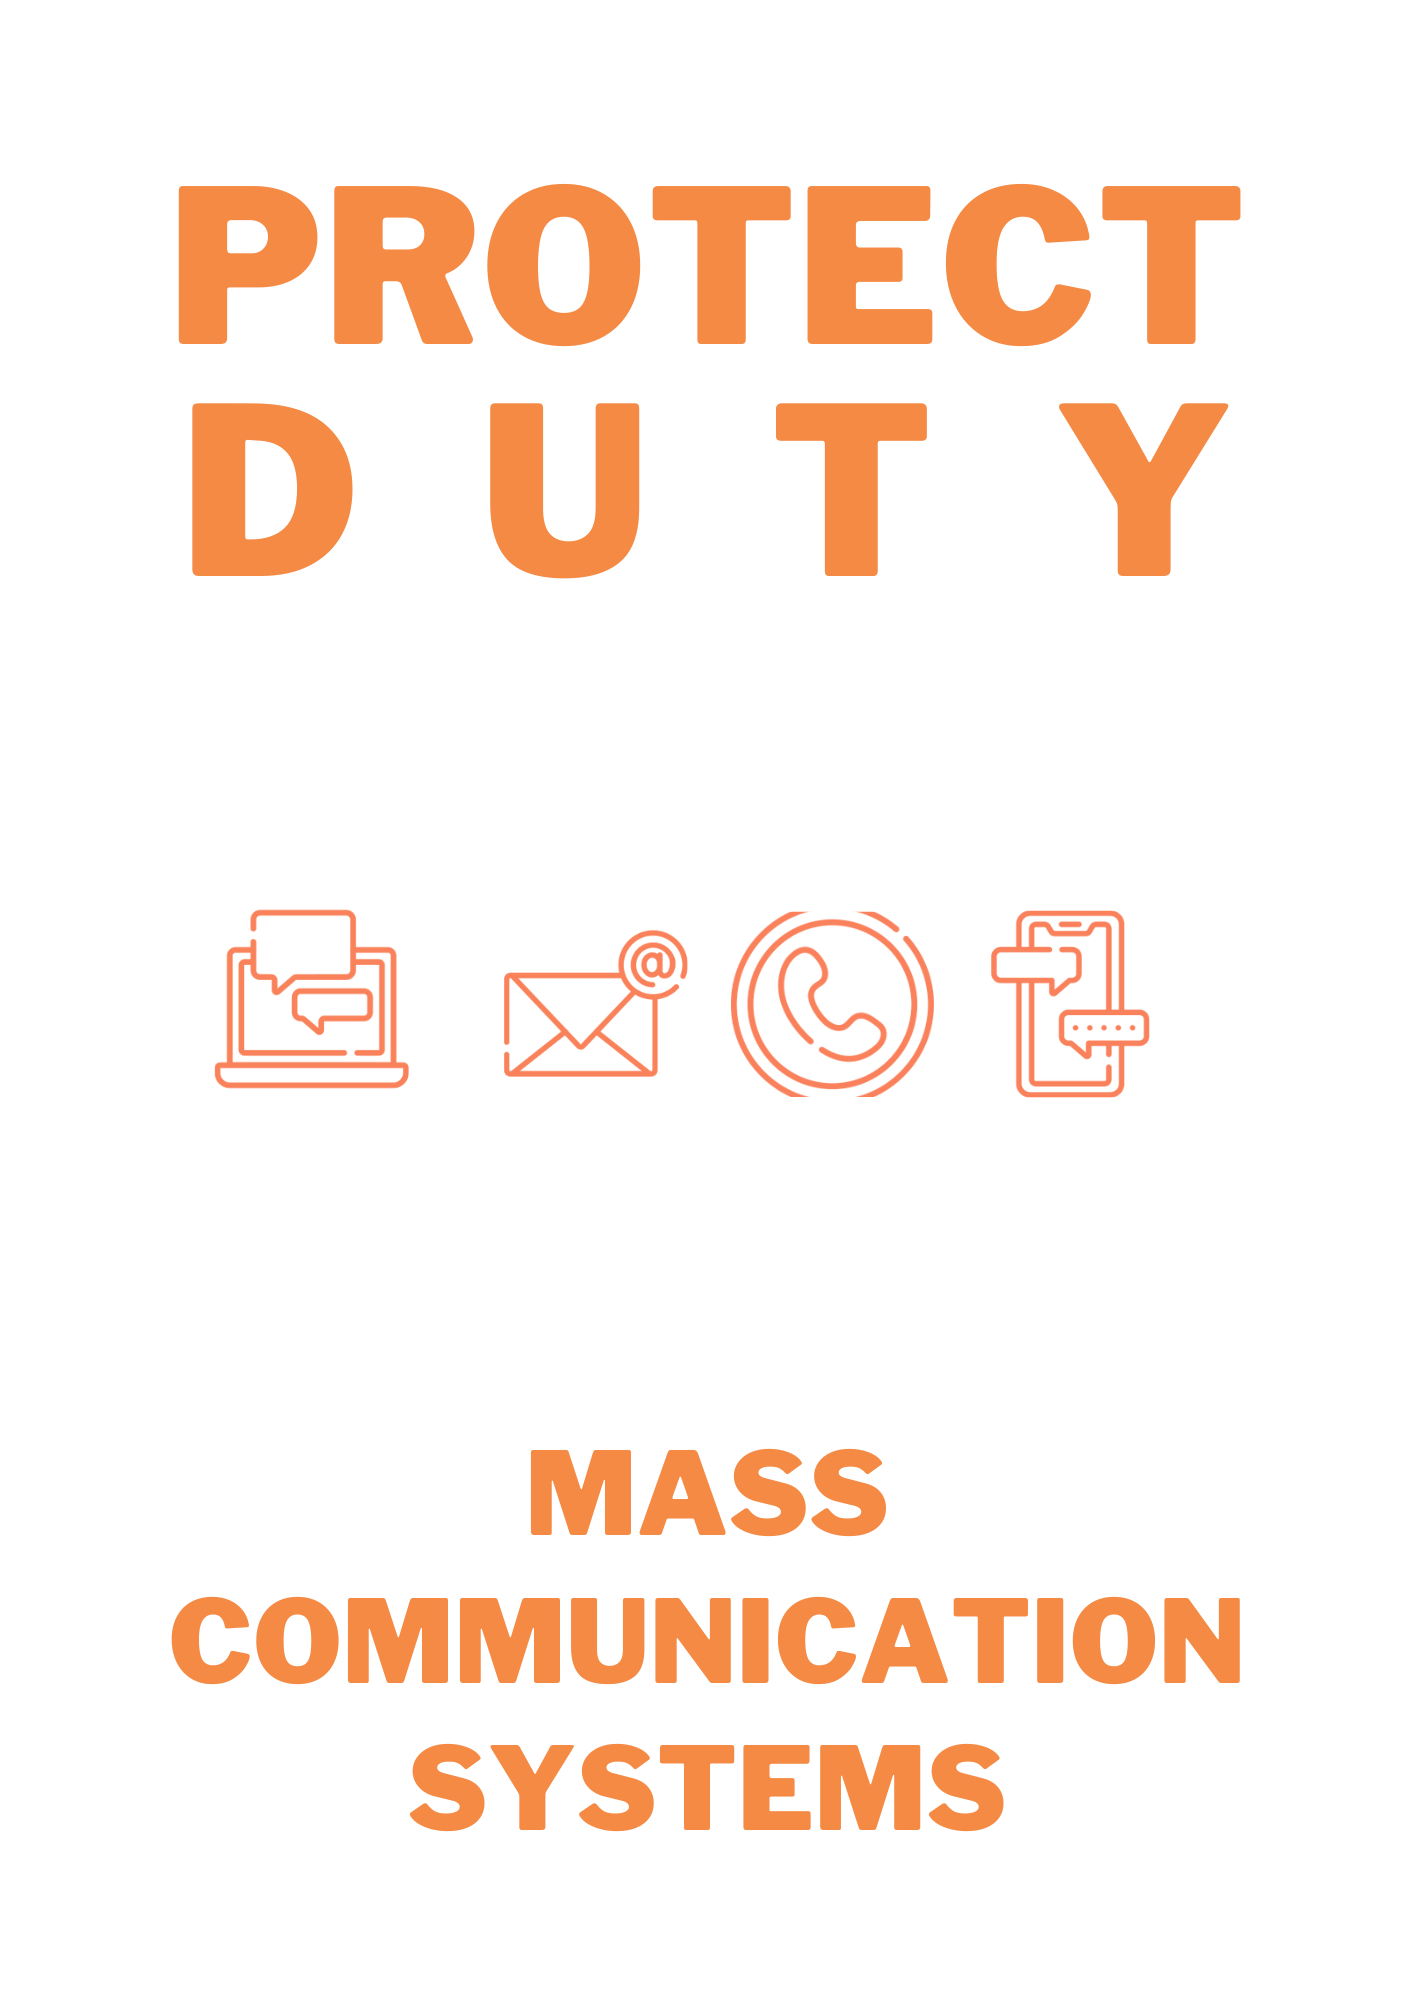 Mass communication systems use desktop alerts as one form of multi-modal communication.